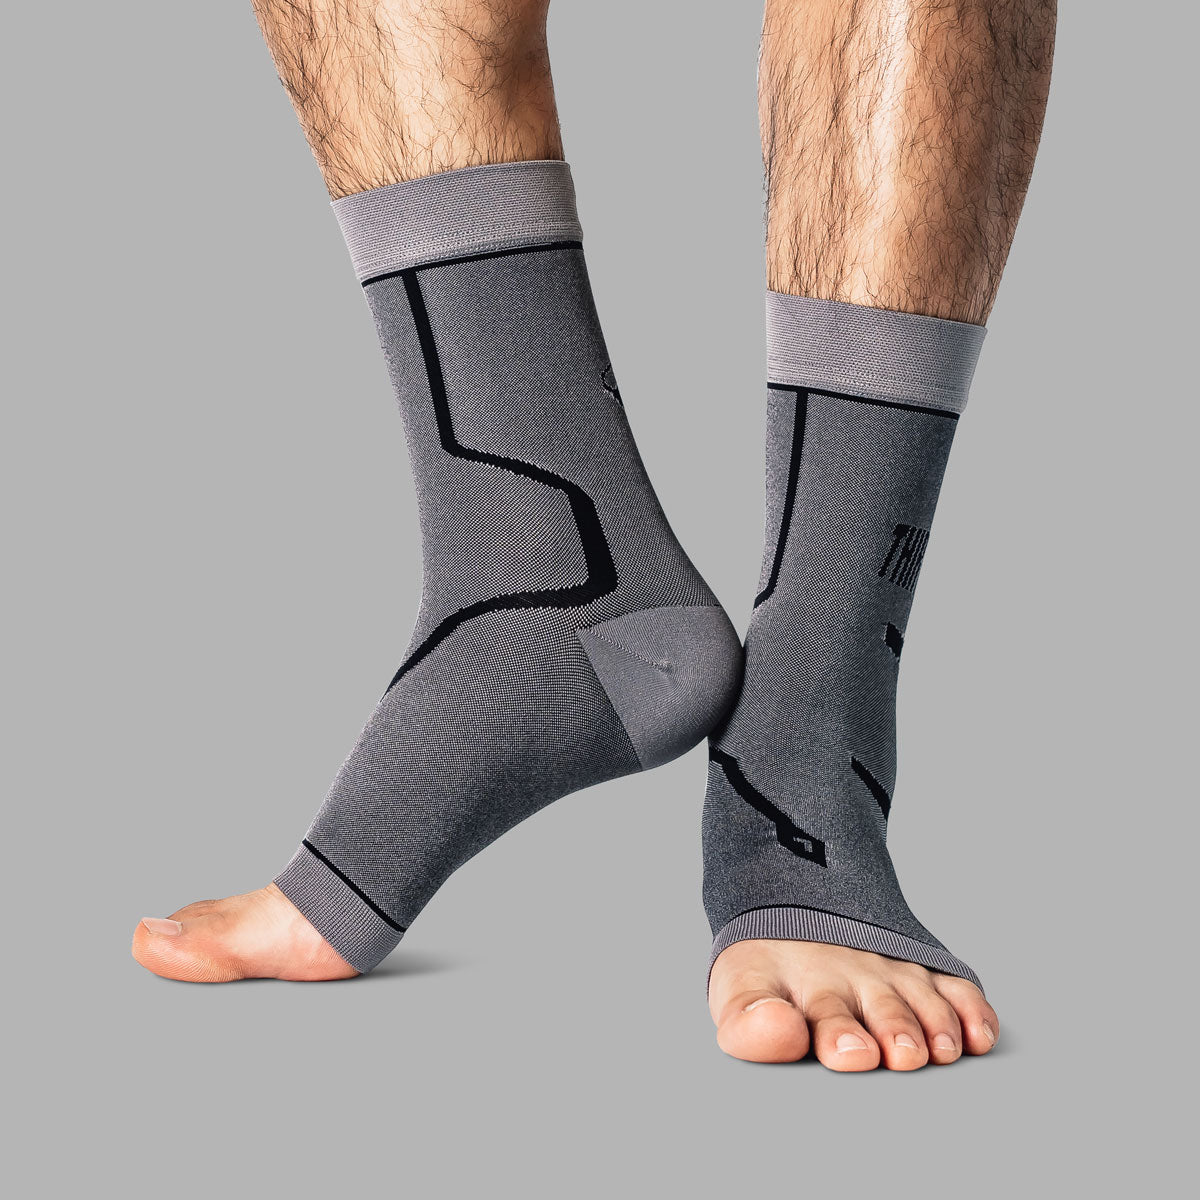 Compression socks vs compression sleeves